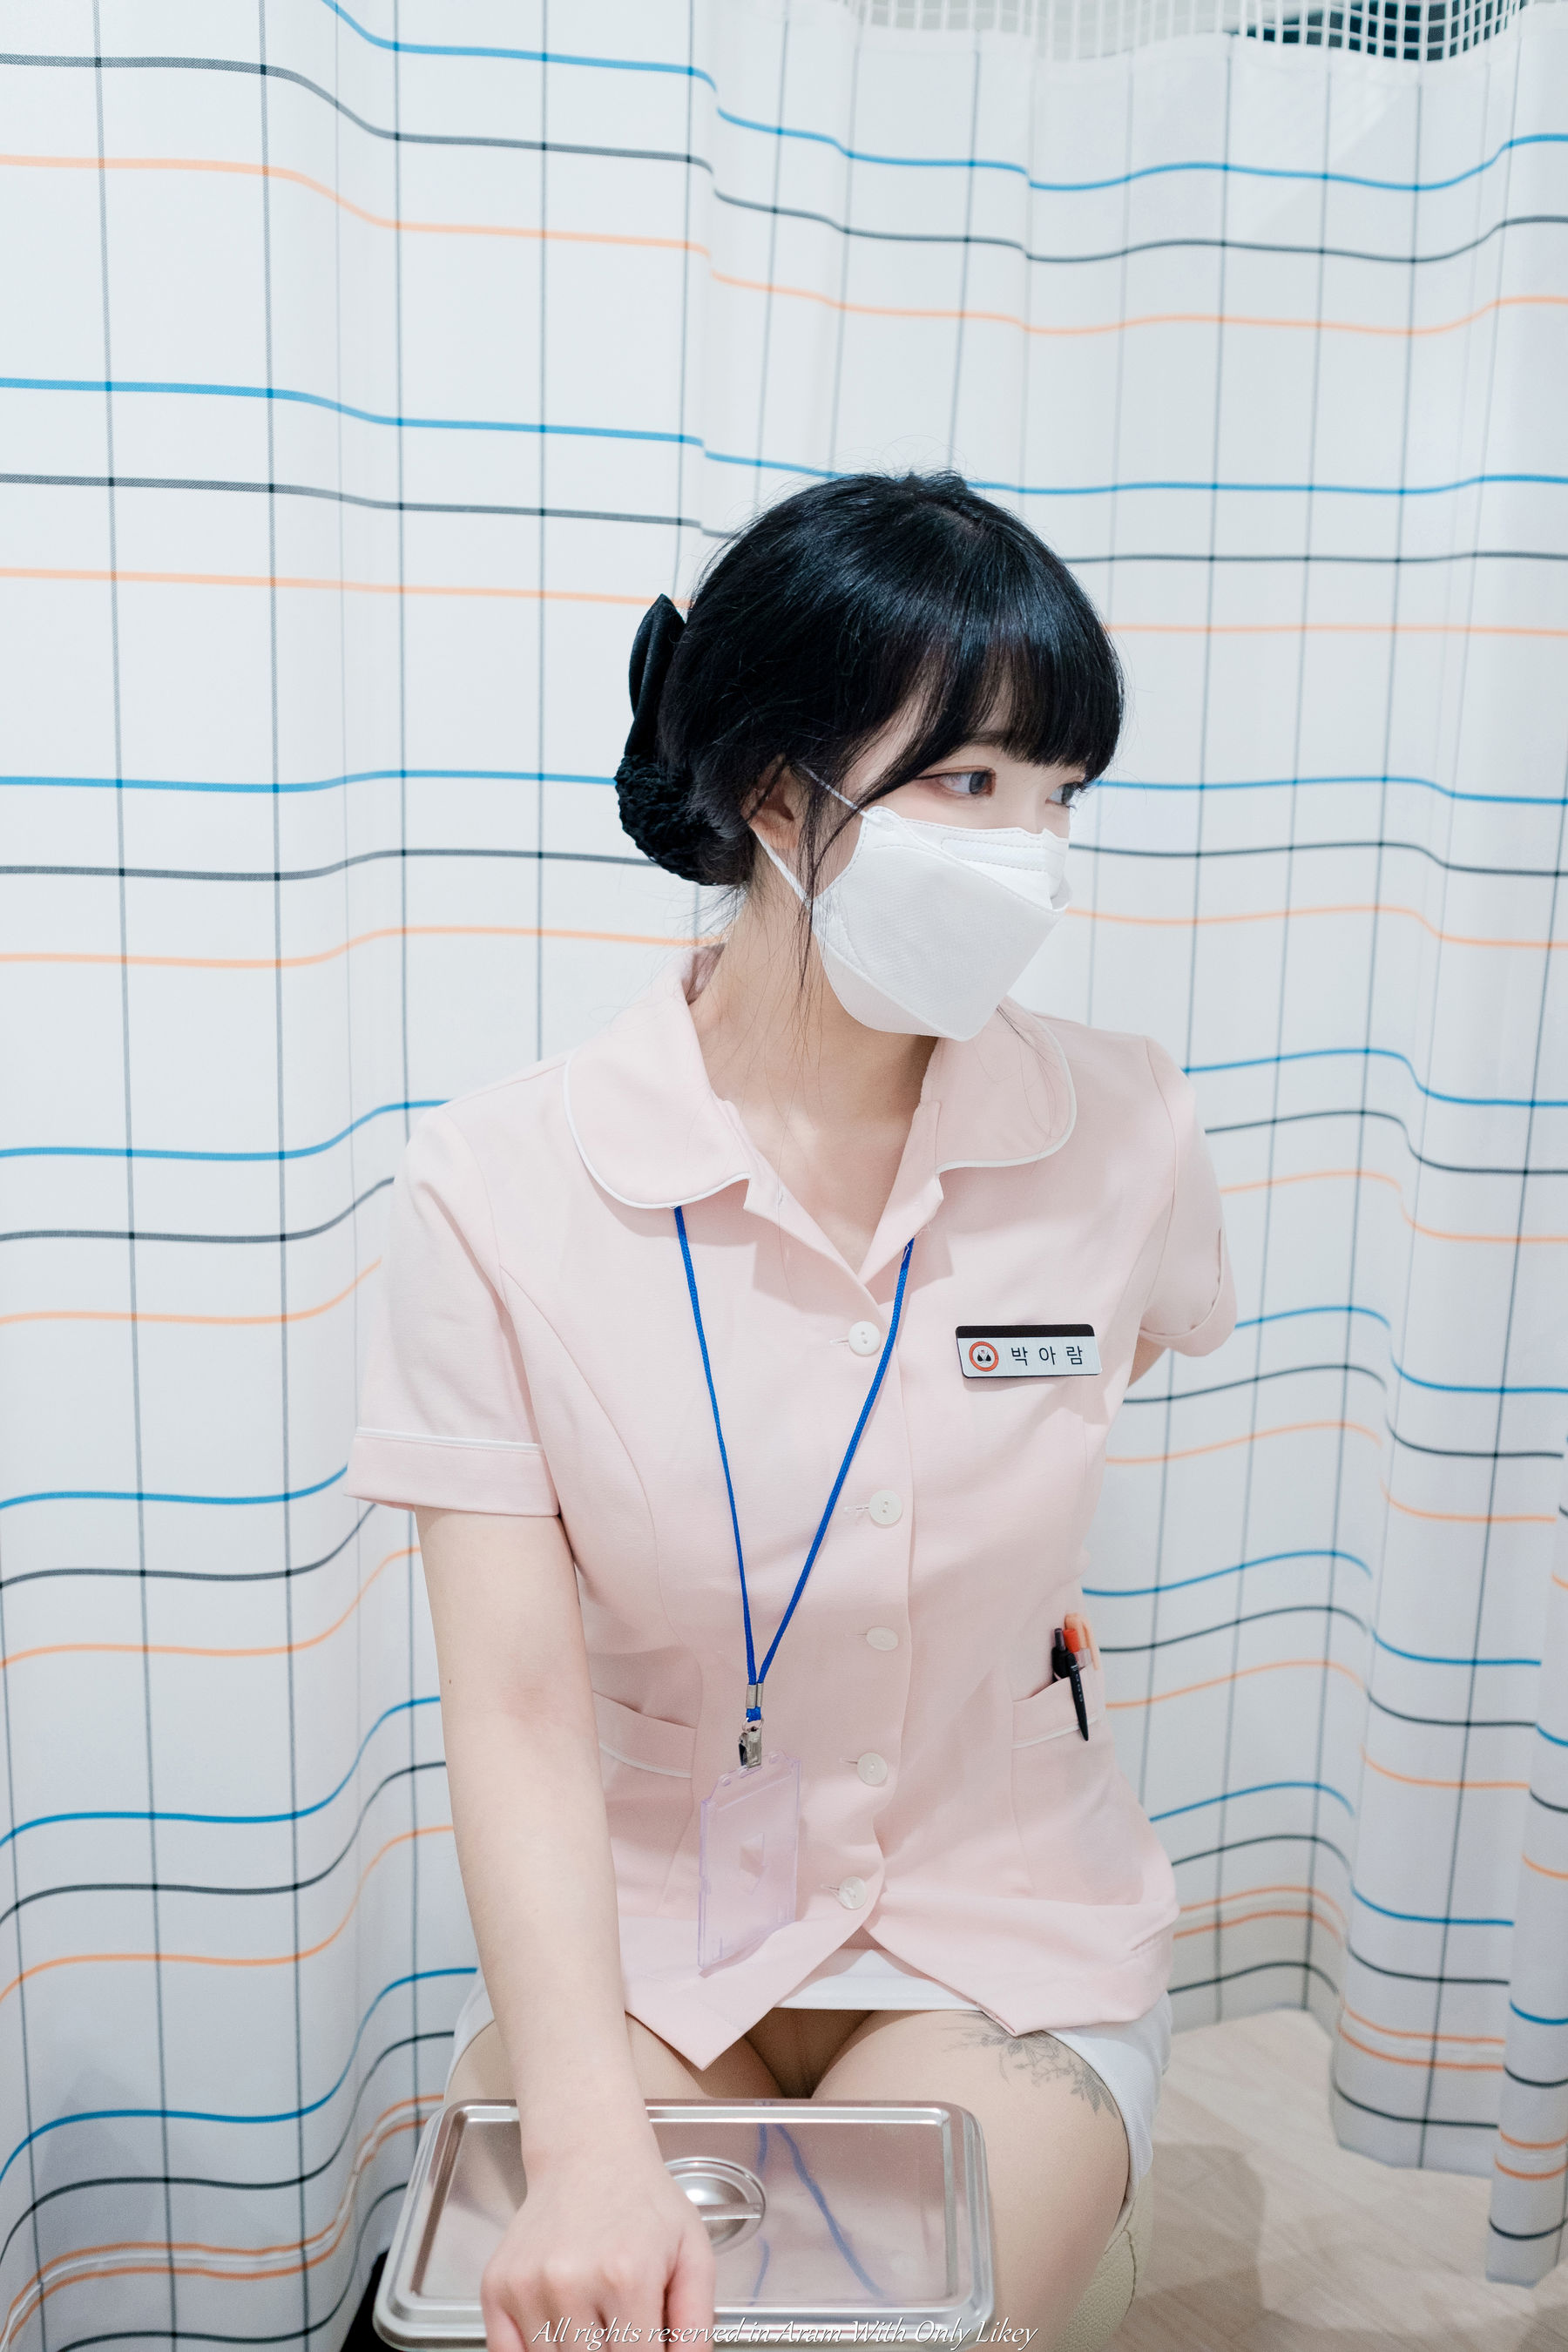 View - [LIKEY] Aram - A urologist Nurse - 图库库